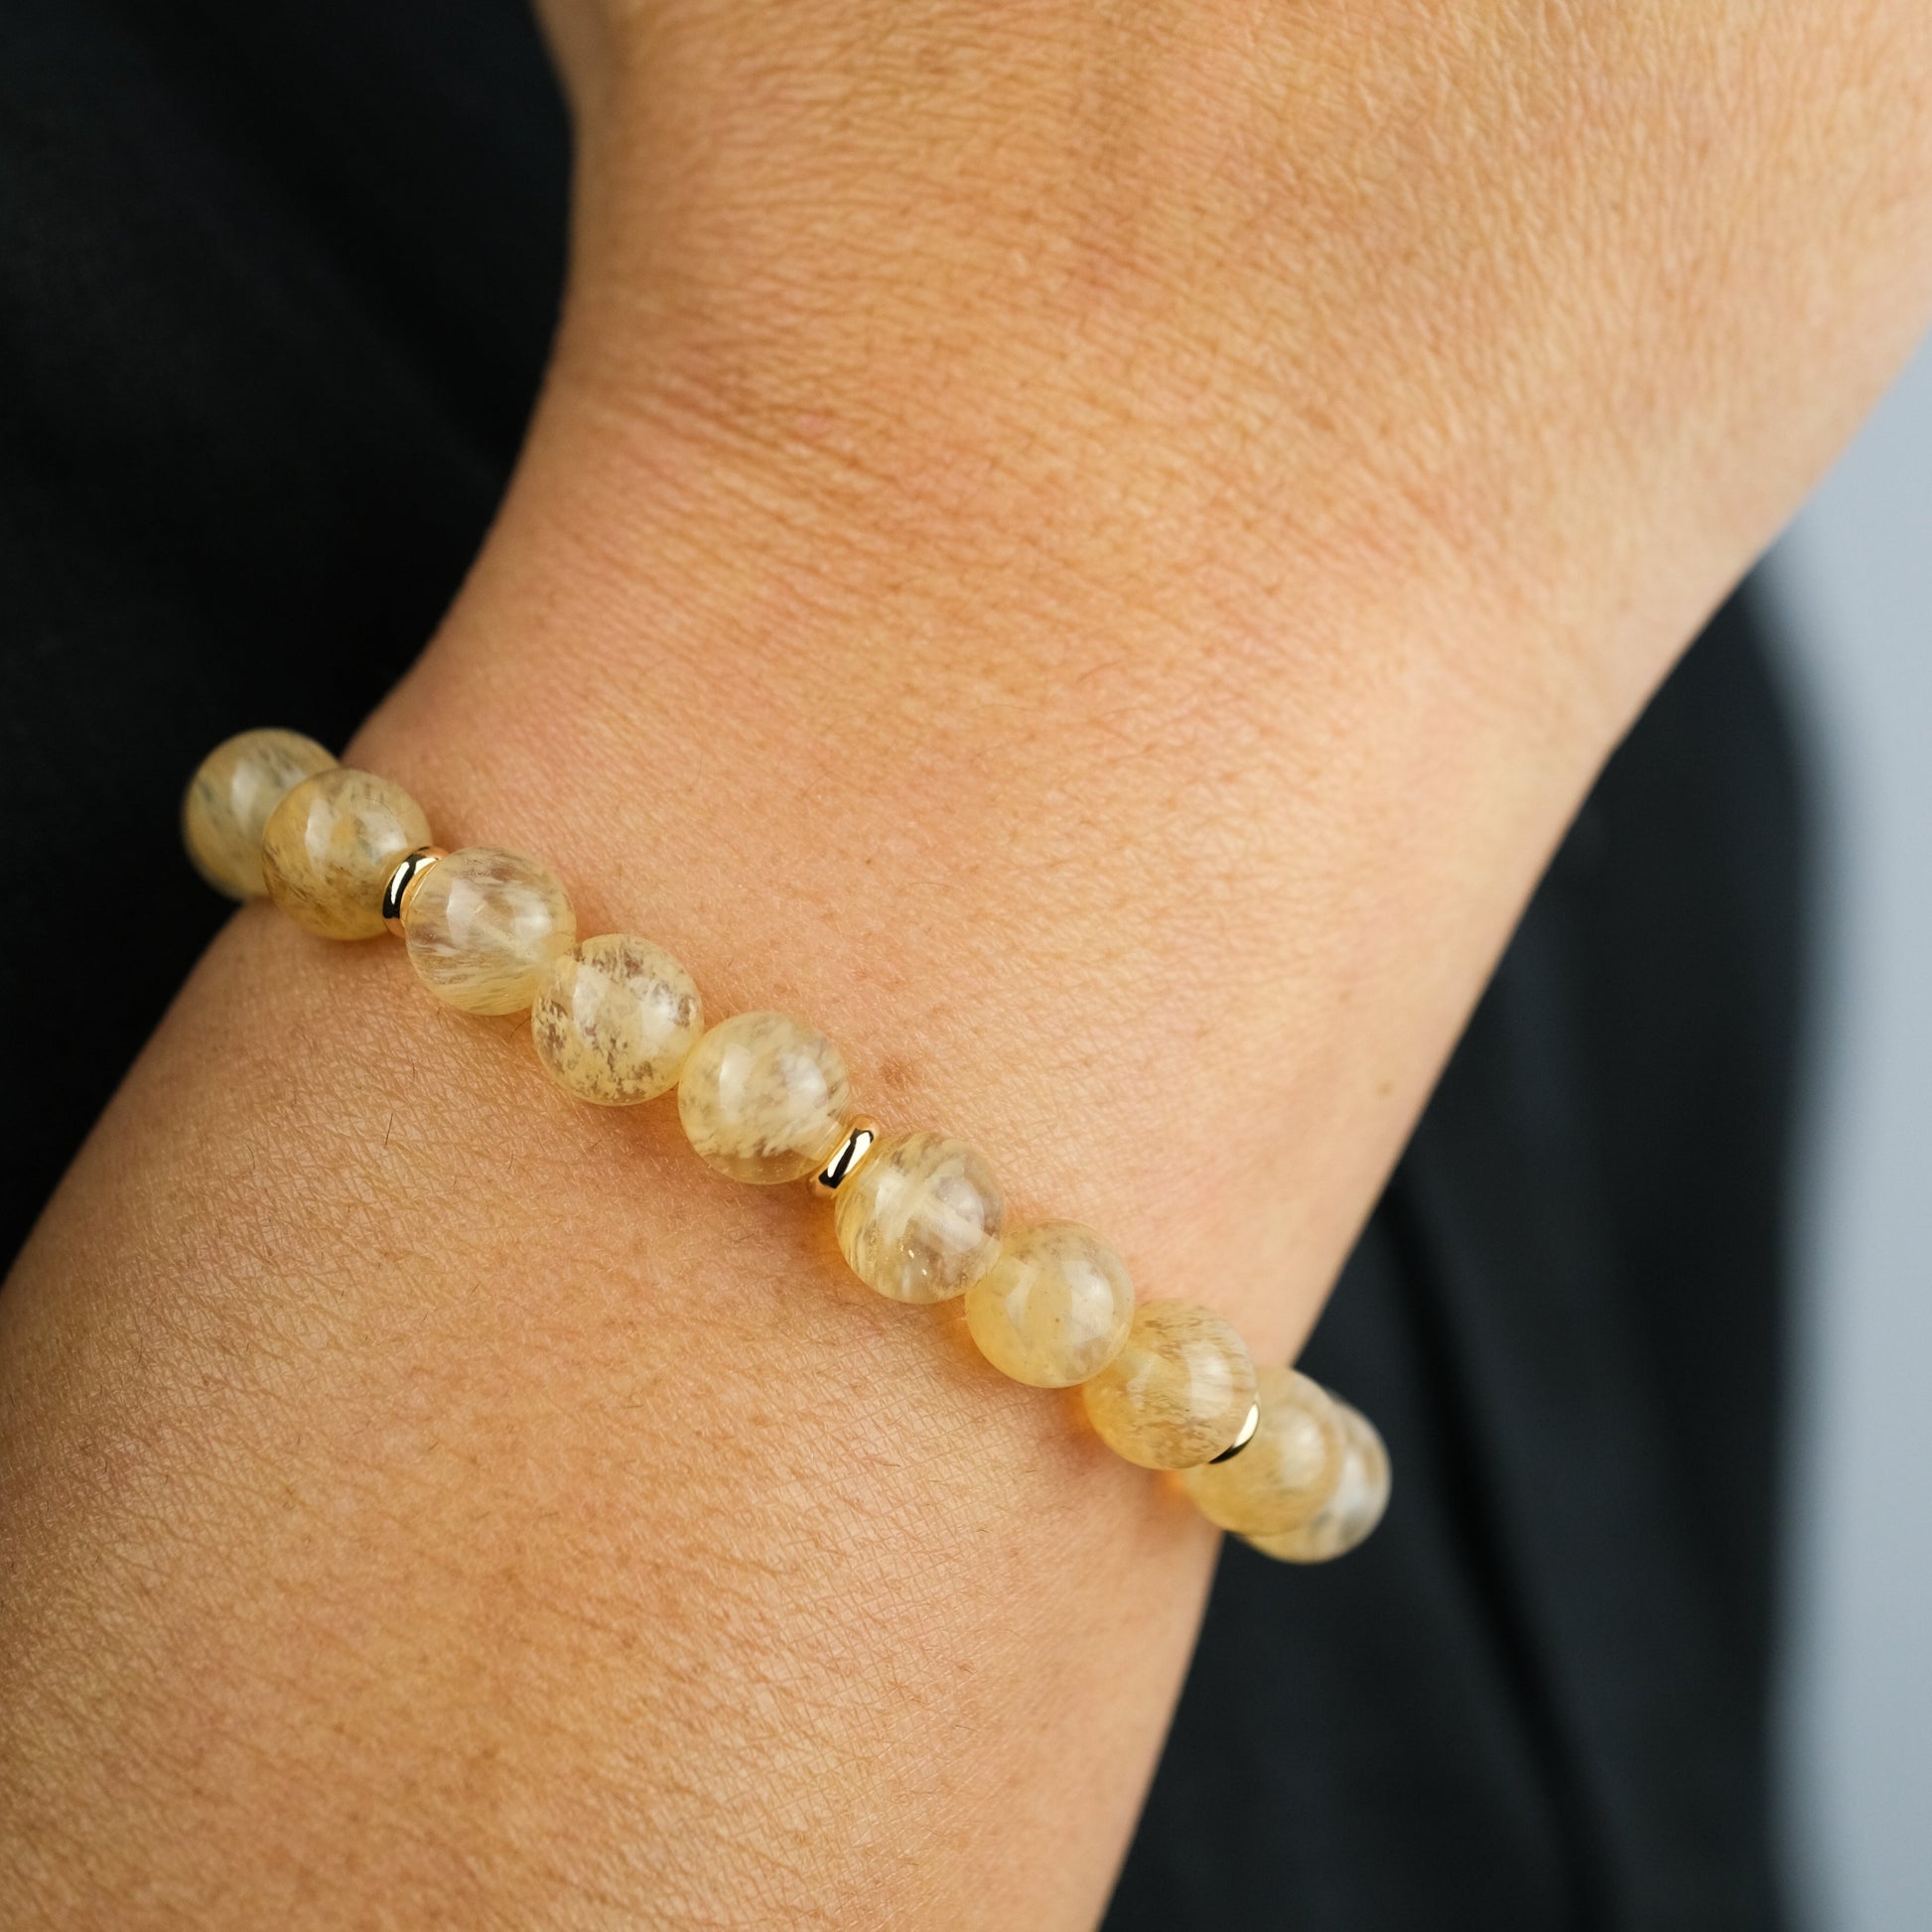 A model wearing a golden healer gemstone bracelet